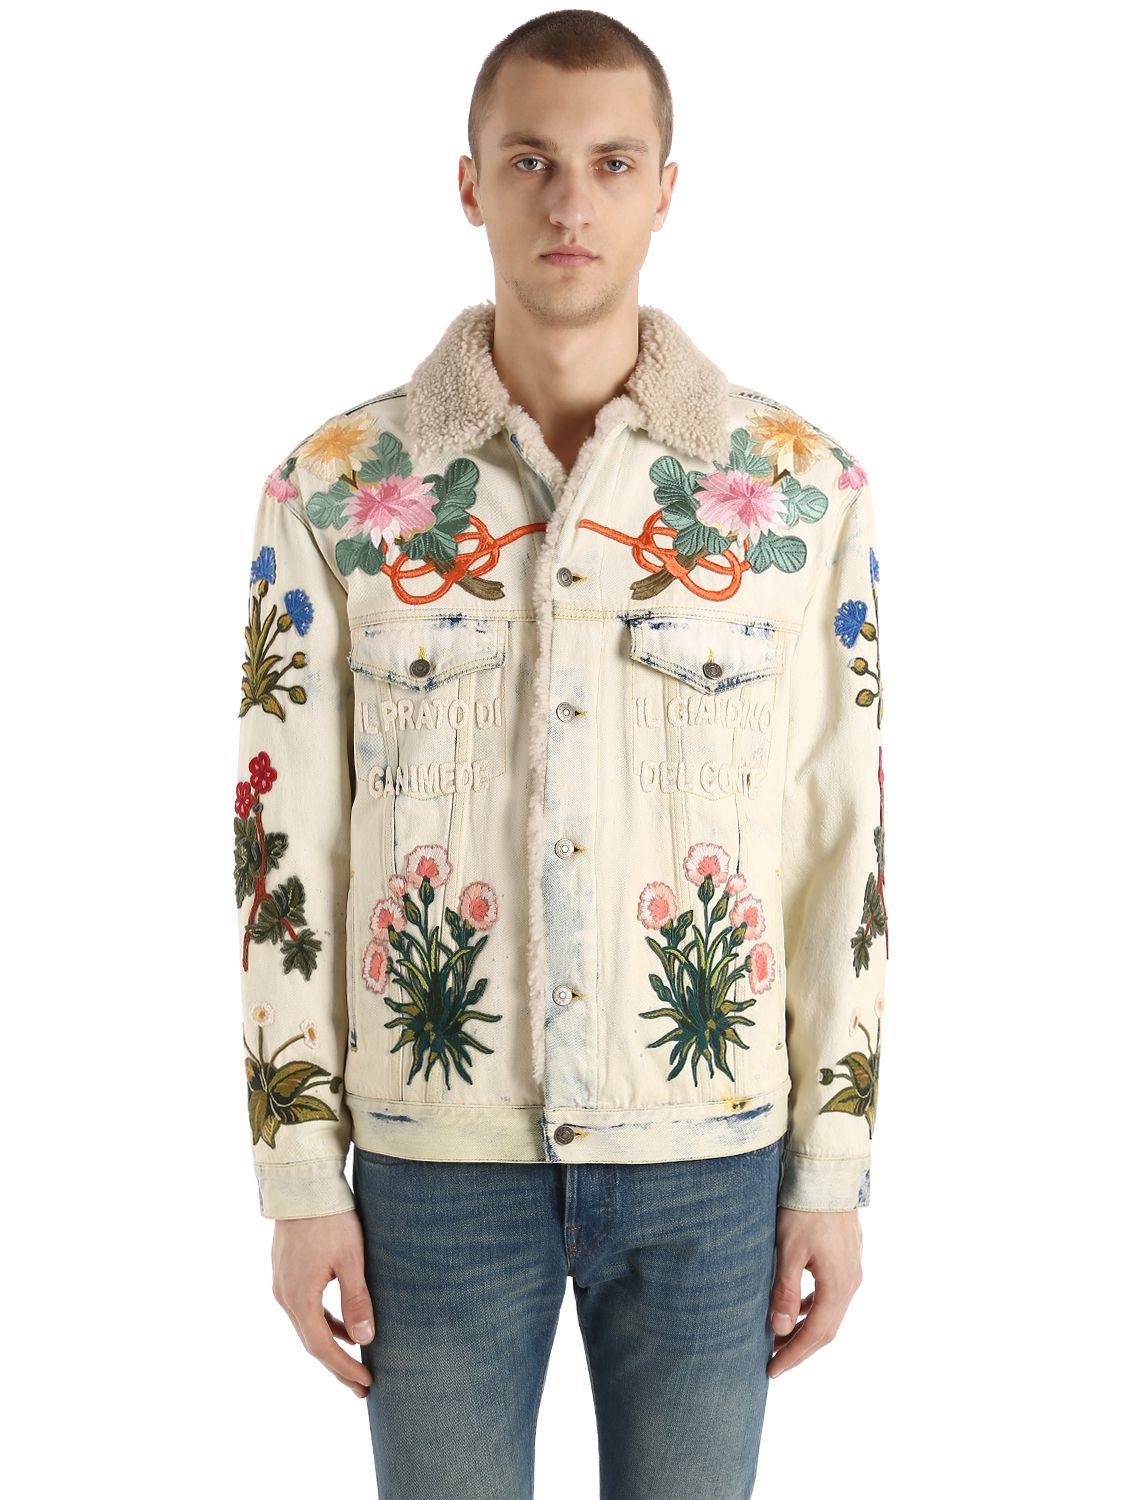 Gucci embroidered denim jacket Archives - STYLE DU MONDE